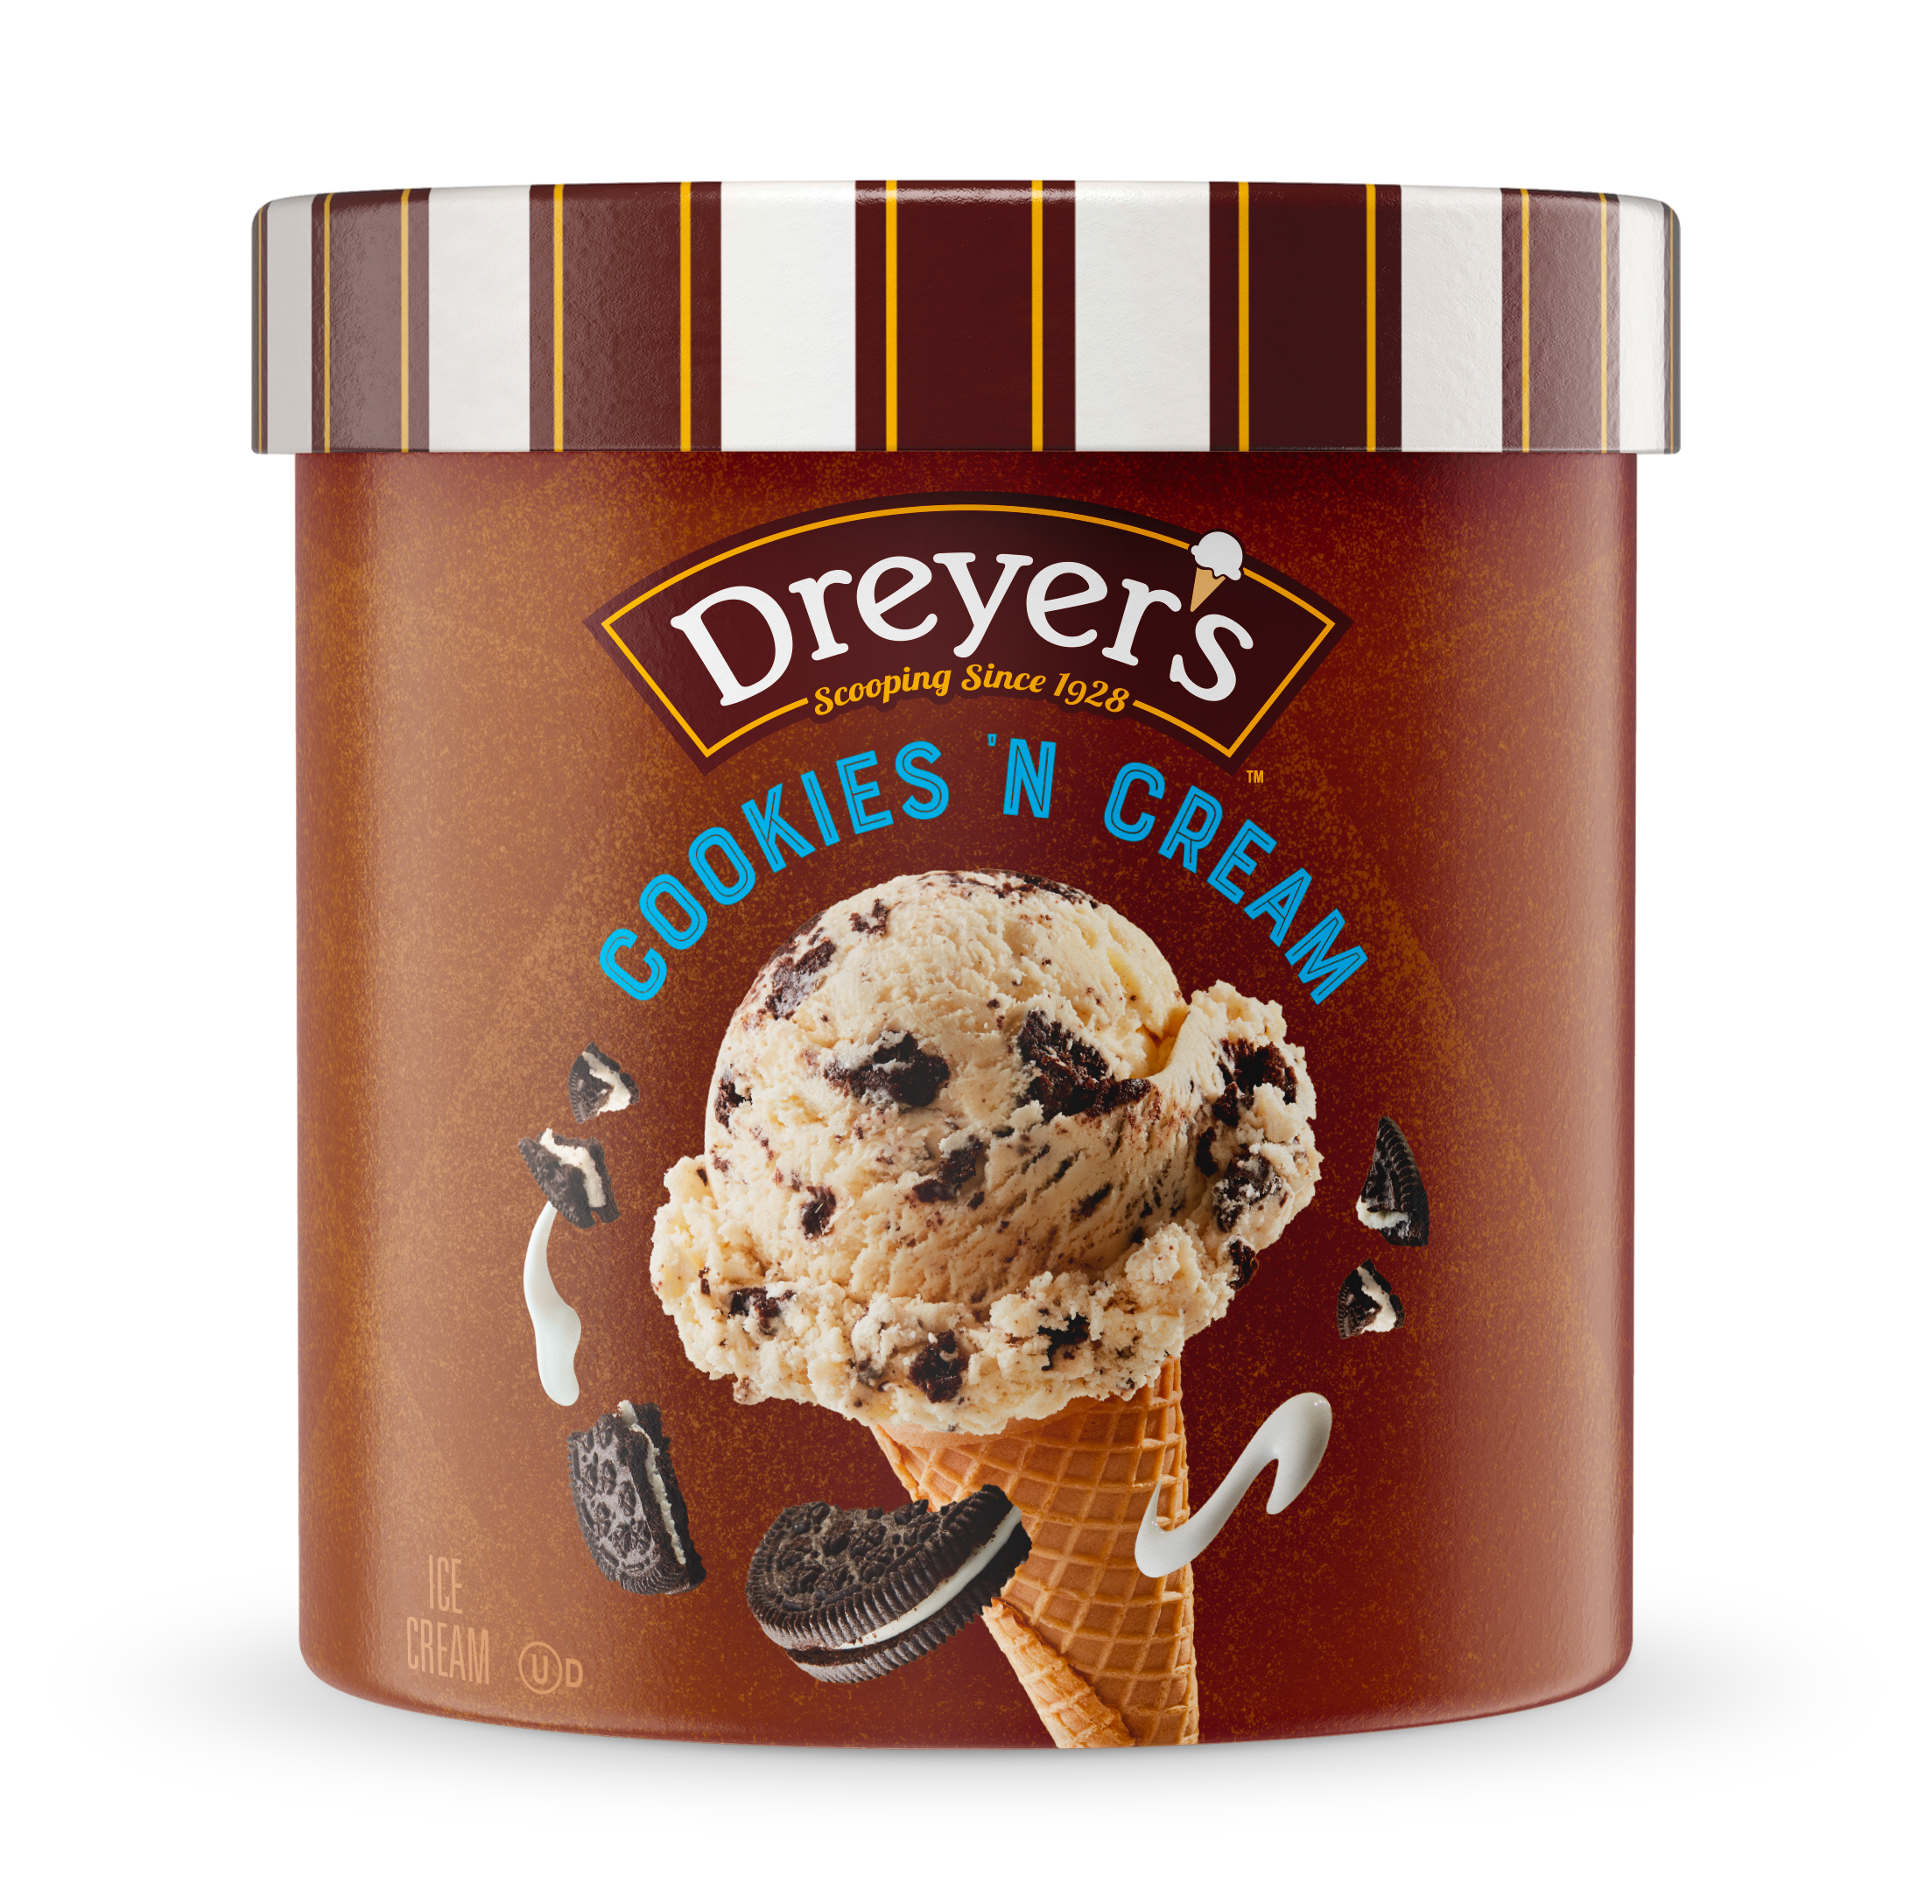 Carton of Dreyer's chocolate ice cream